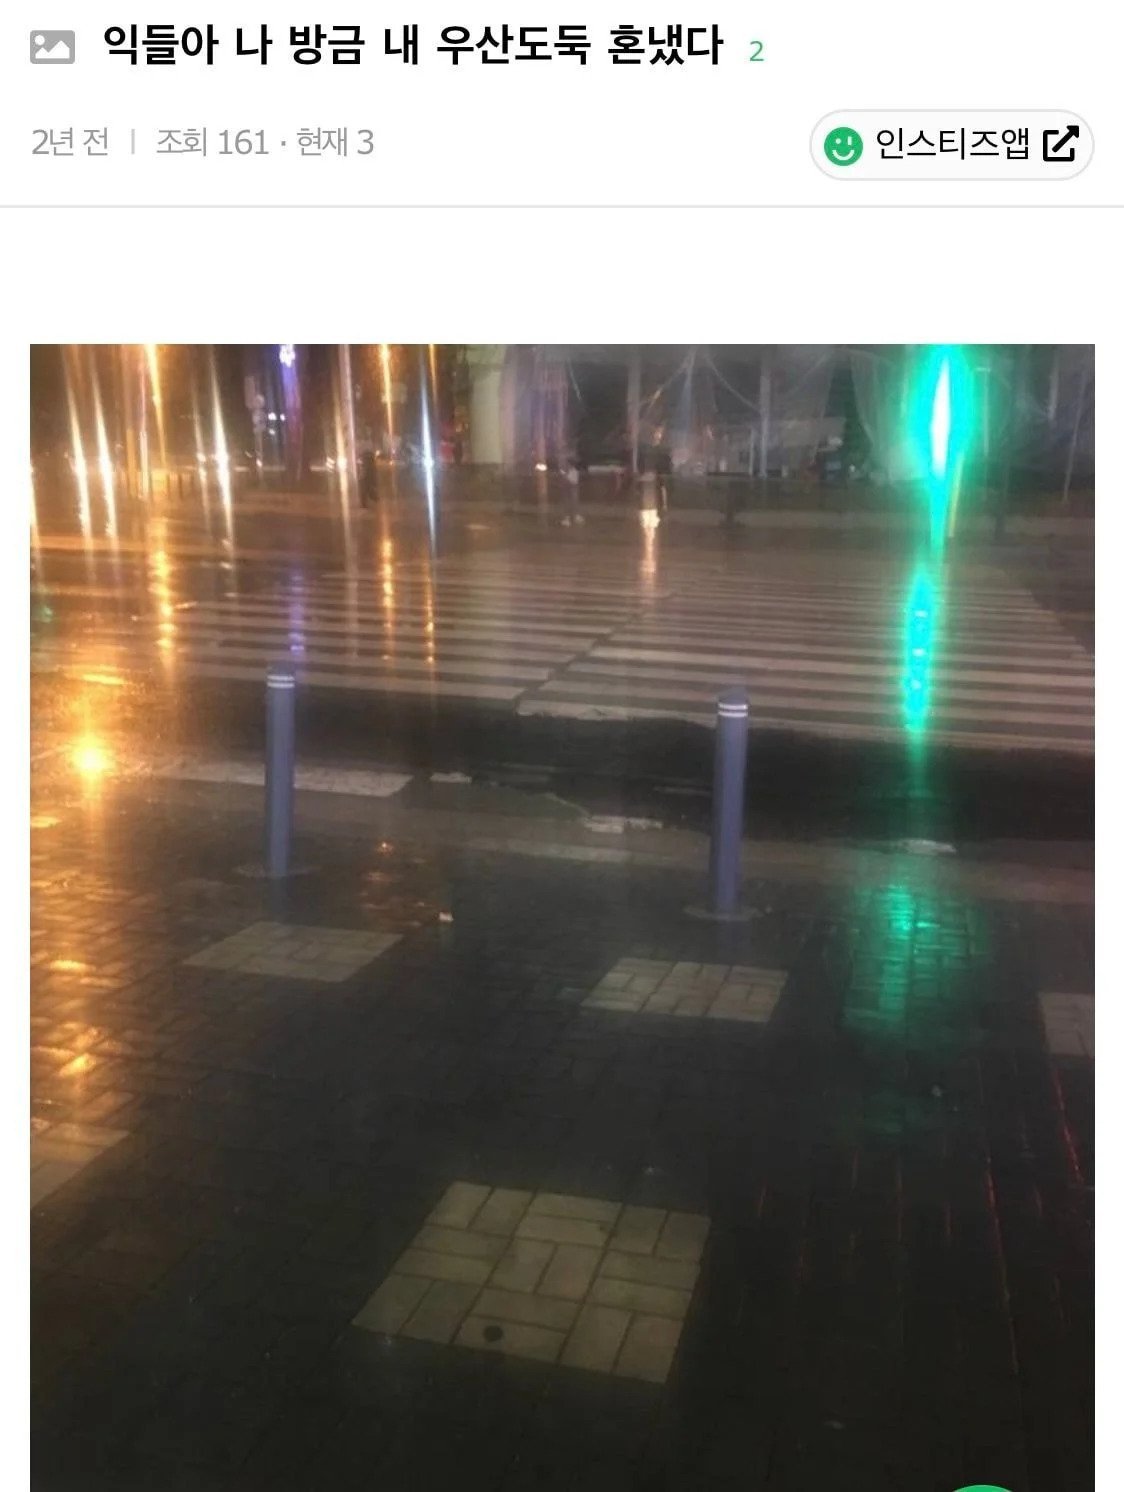 FafqVq.webp.ren.jpg 매장 공용 우산통에 우산을 꽂기 꺼려지는 이유.jpg